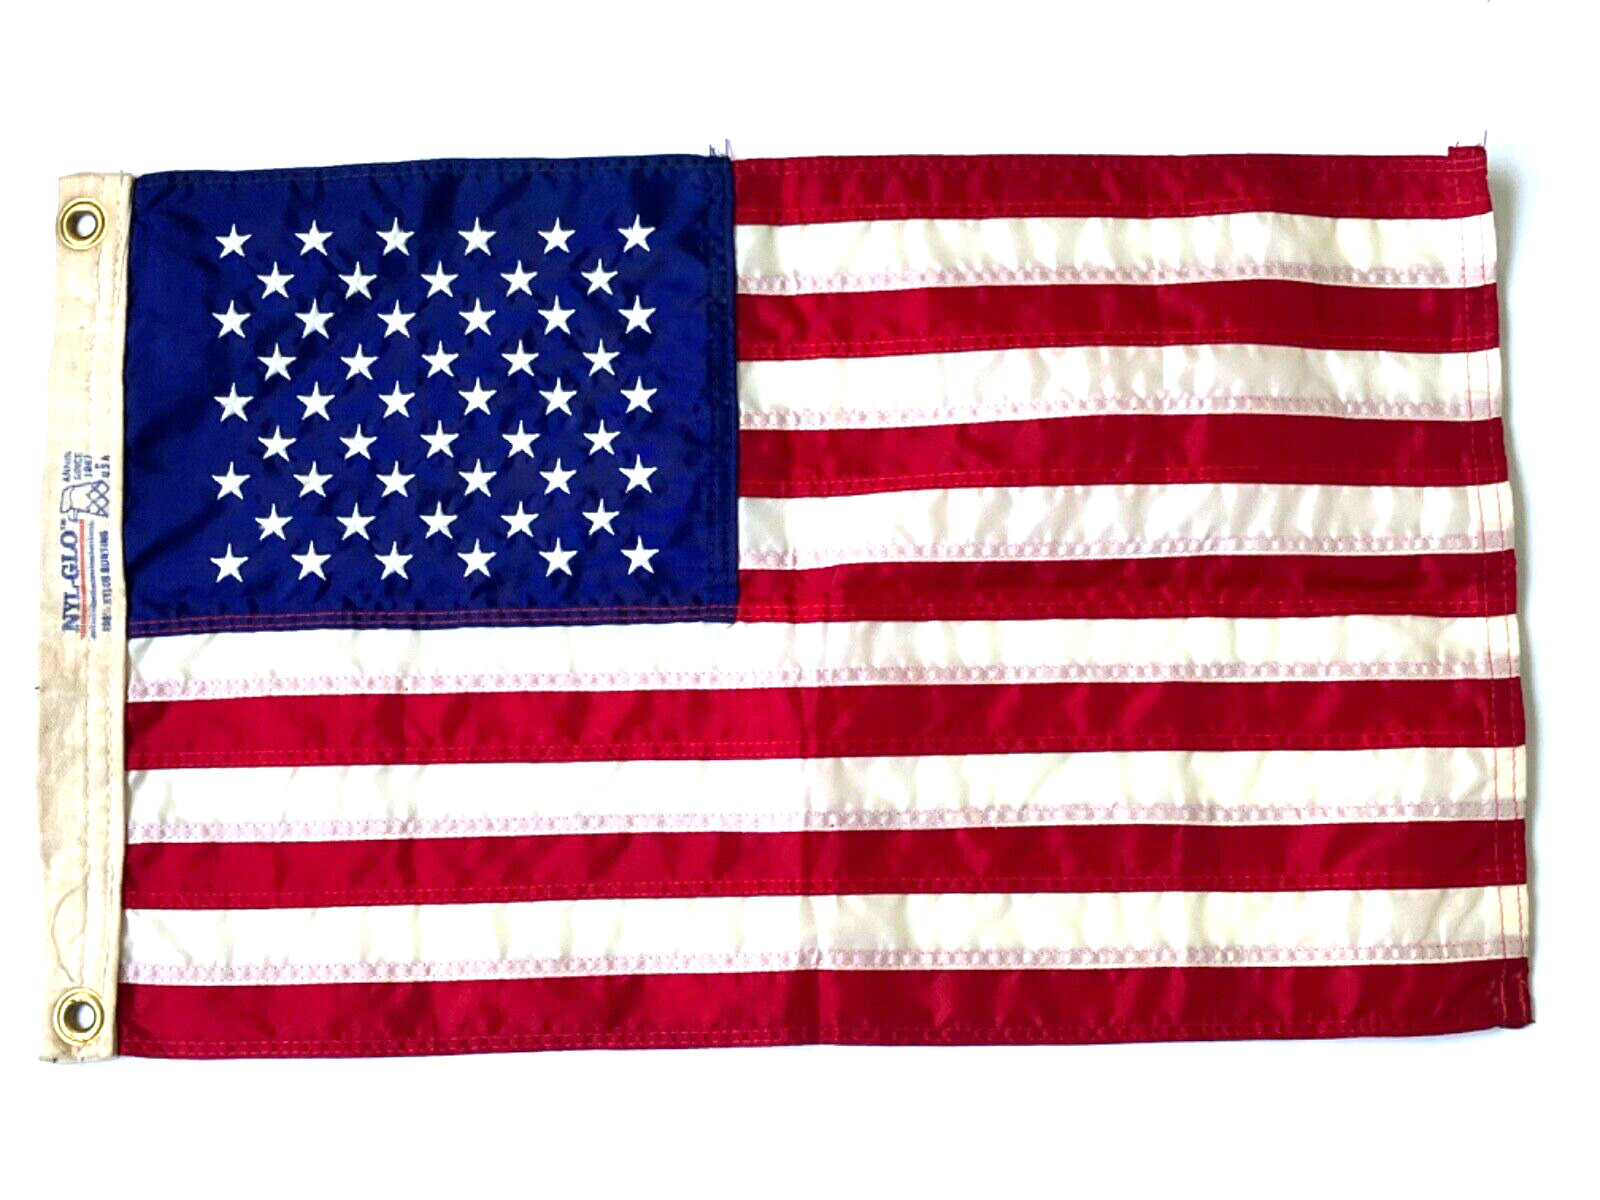 VINTAGE U.S.A FLAG NYL-GLO 48x30cm; Made in U.S.A